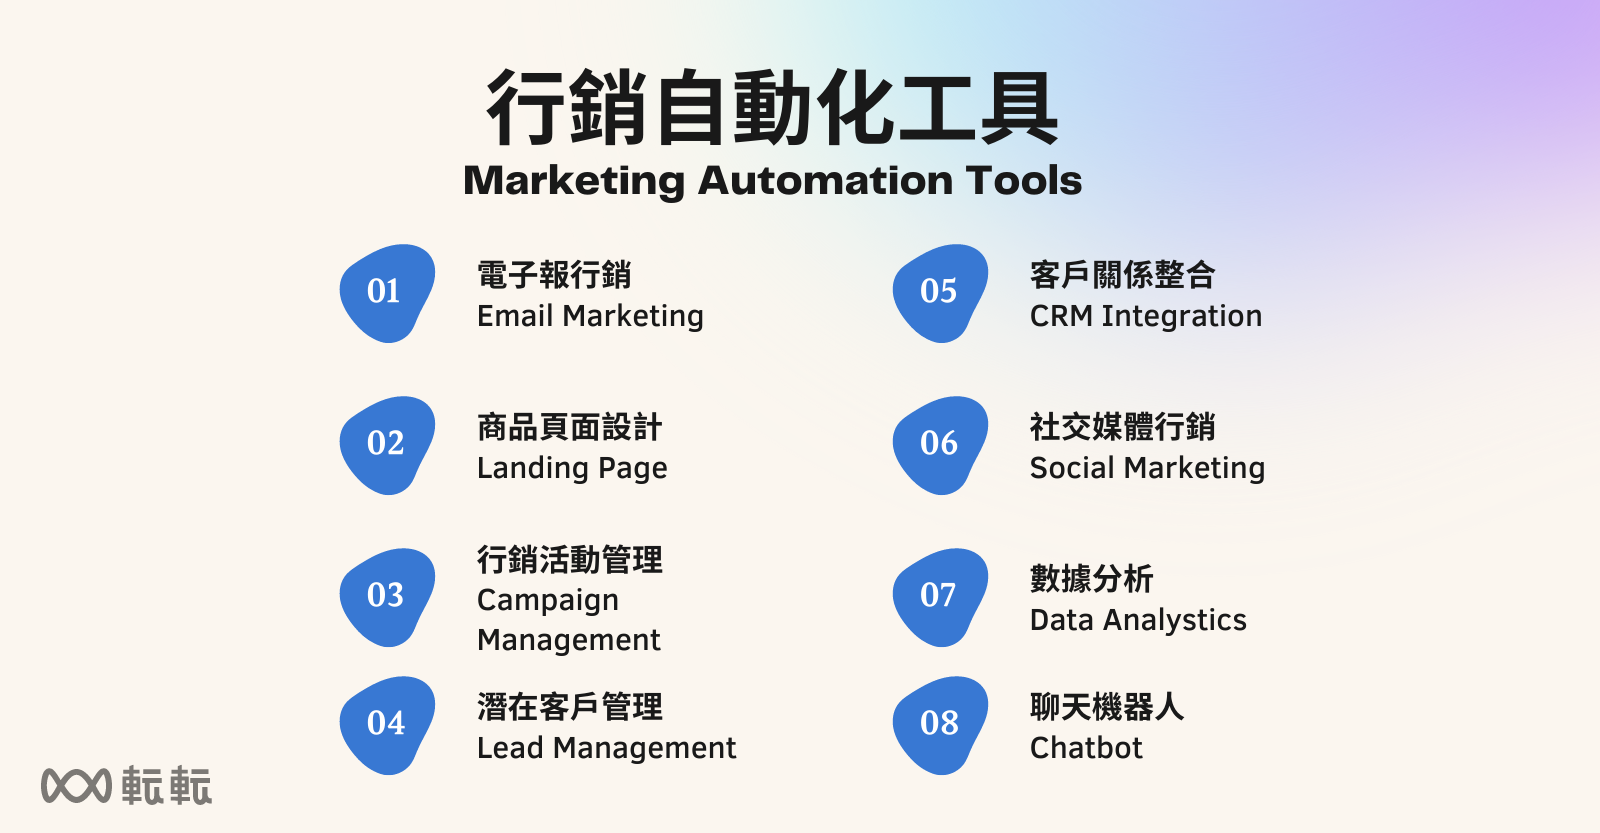 Marketing Automaton Tools